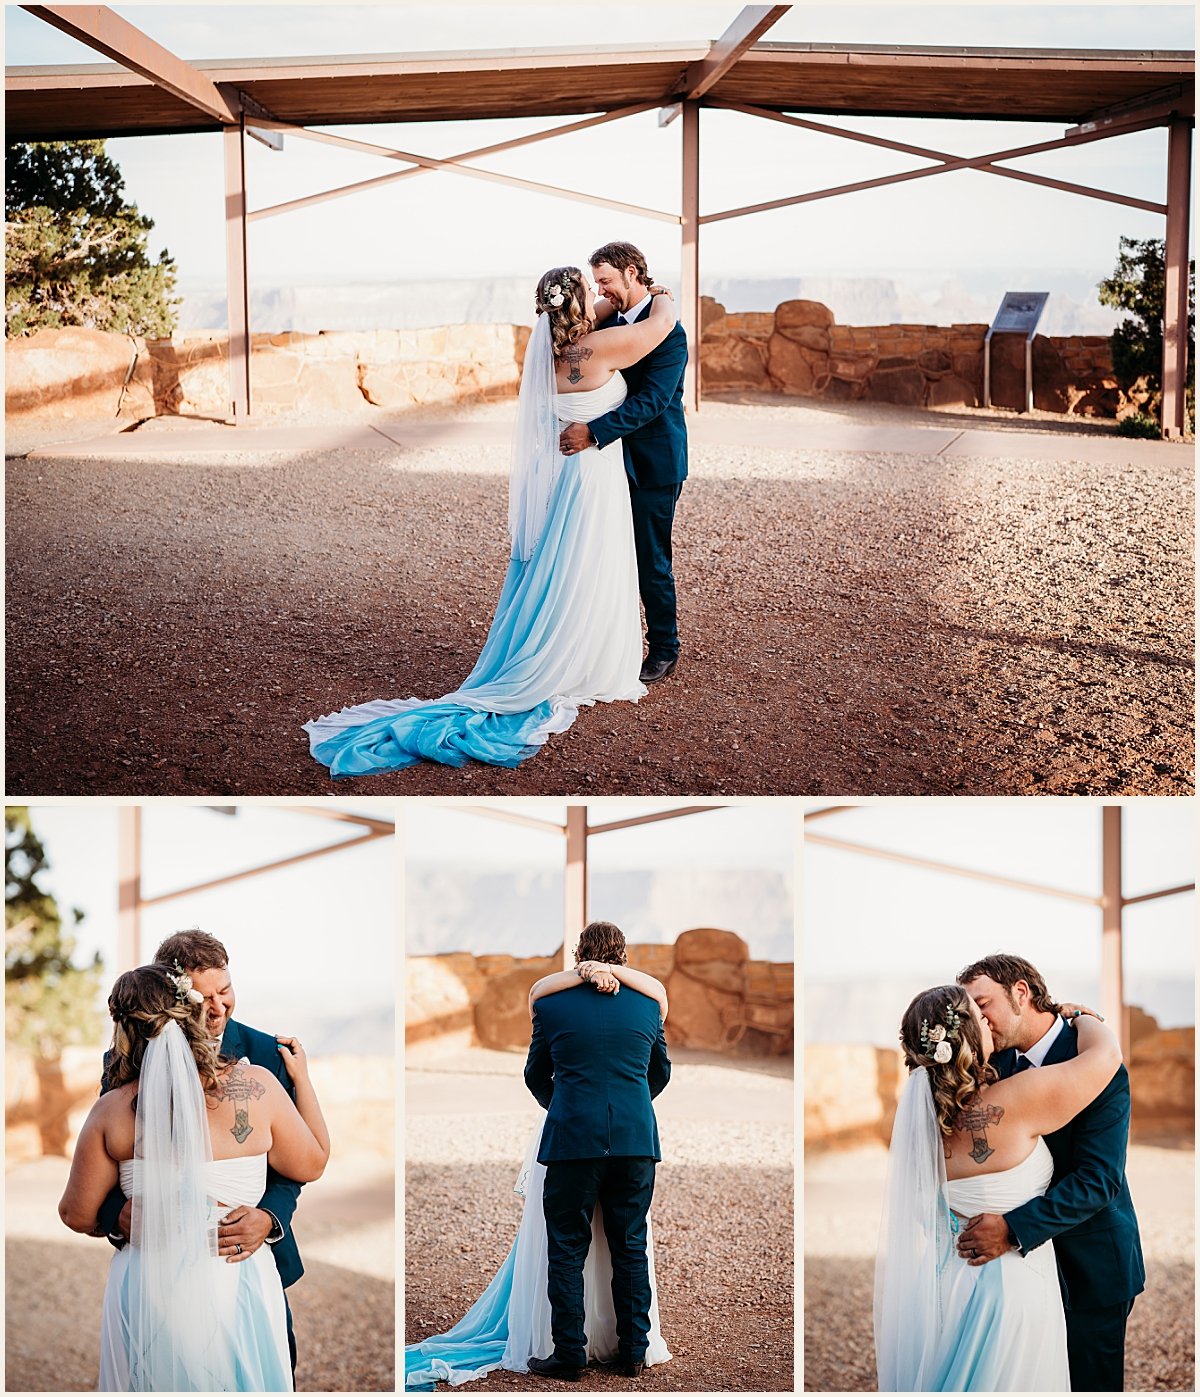 Bride and groom share an intimate first dance | Lauren Crumpler Photography | Elopement Wedding Photographer